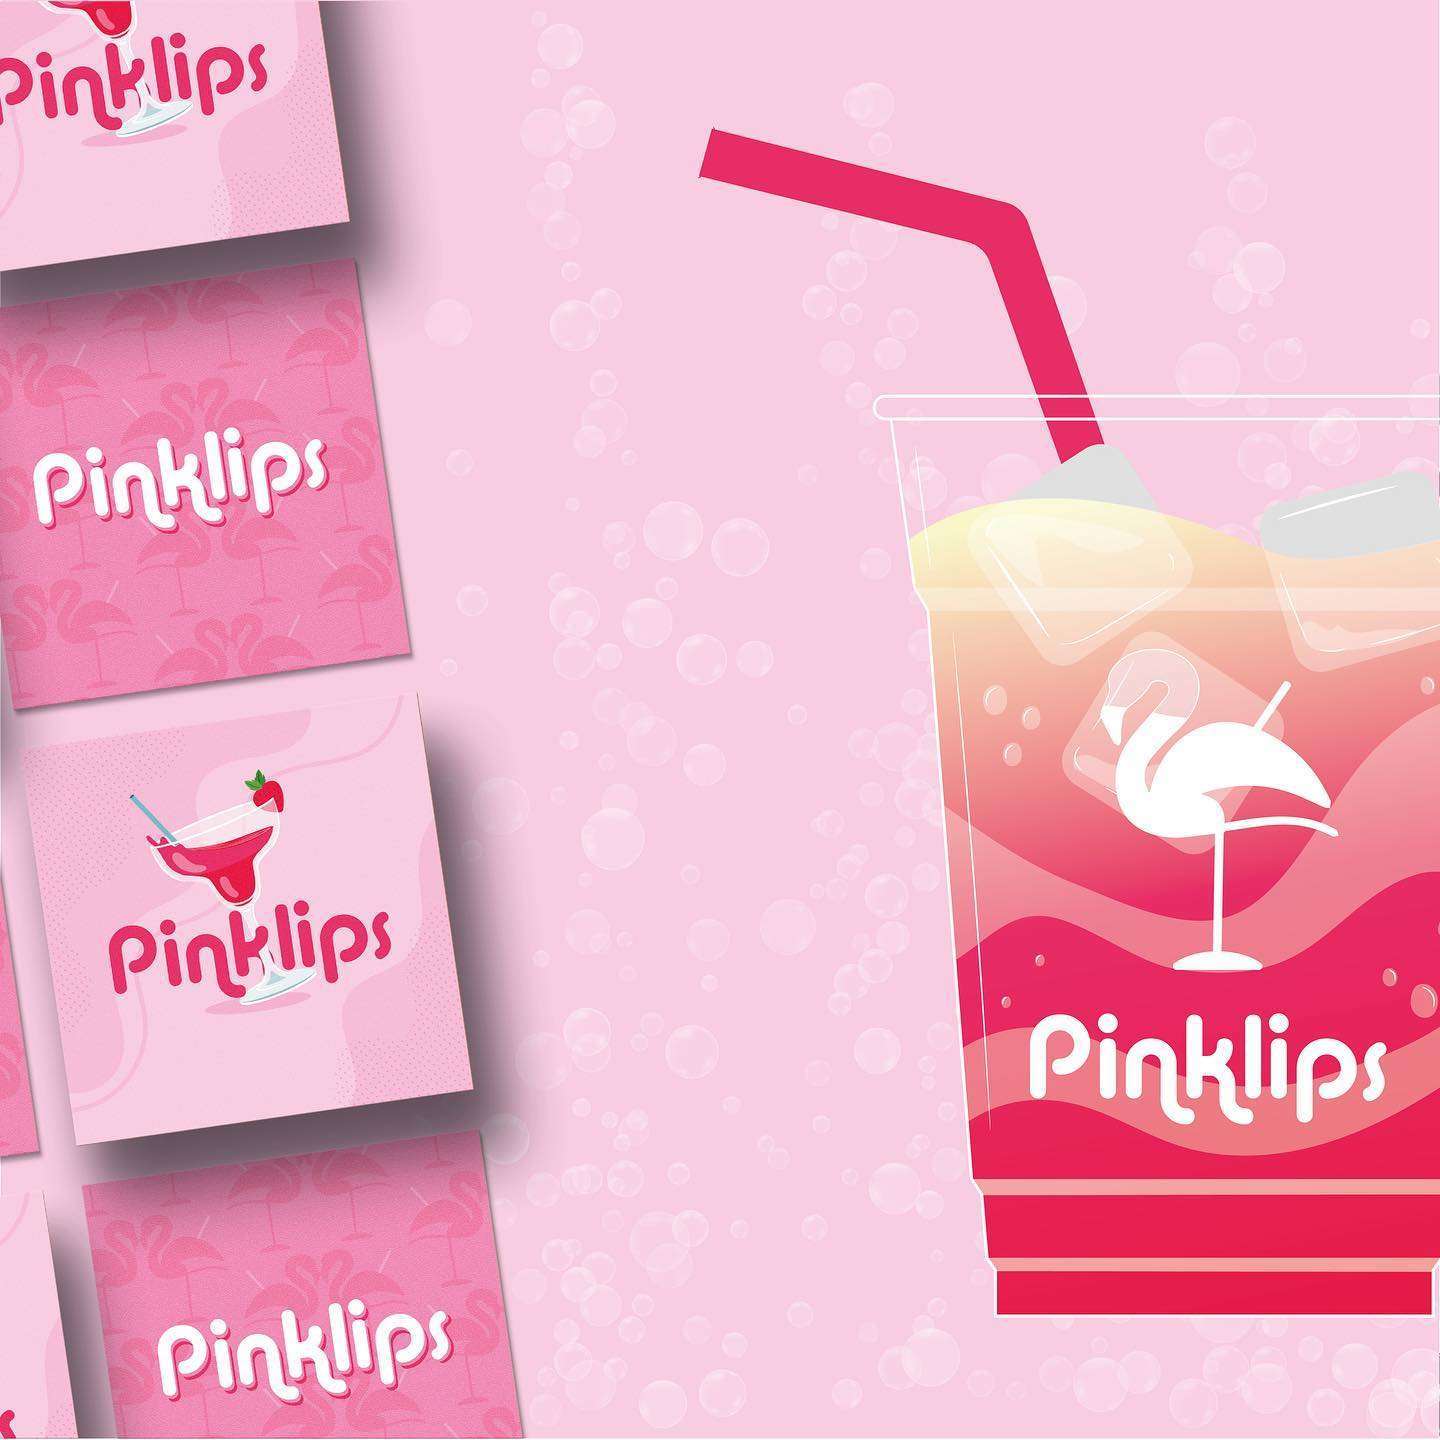 Pinklips